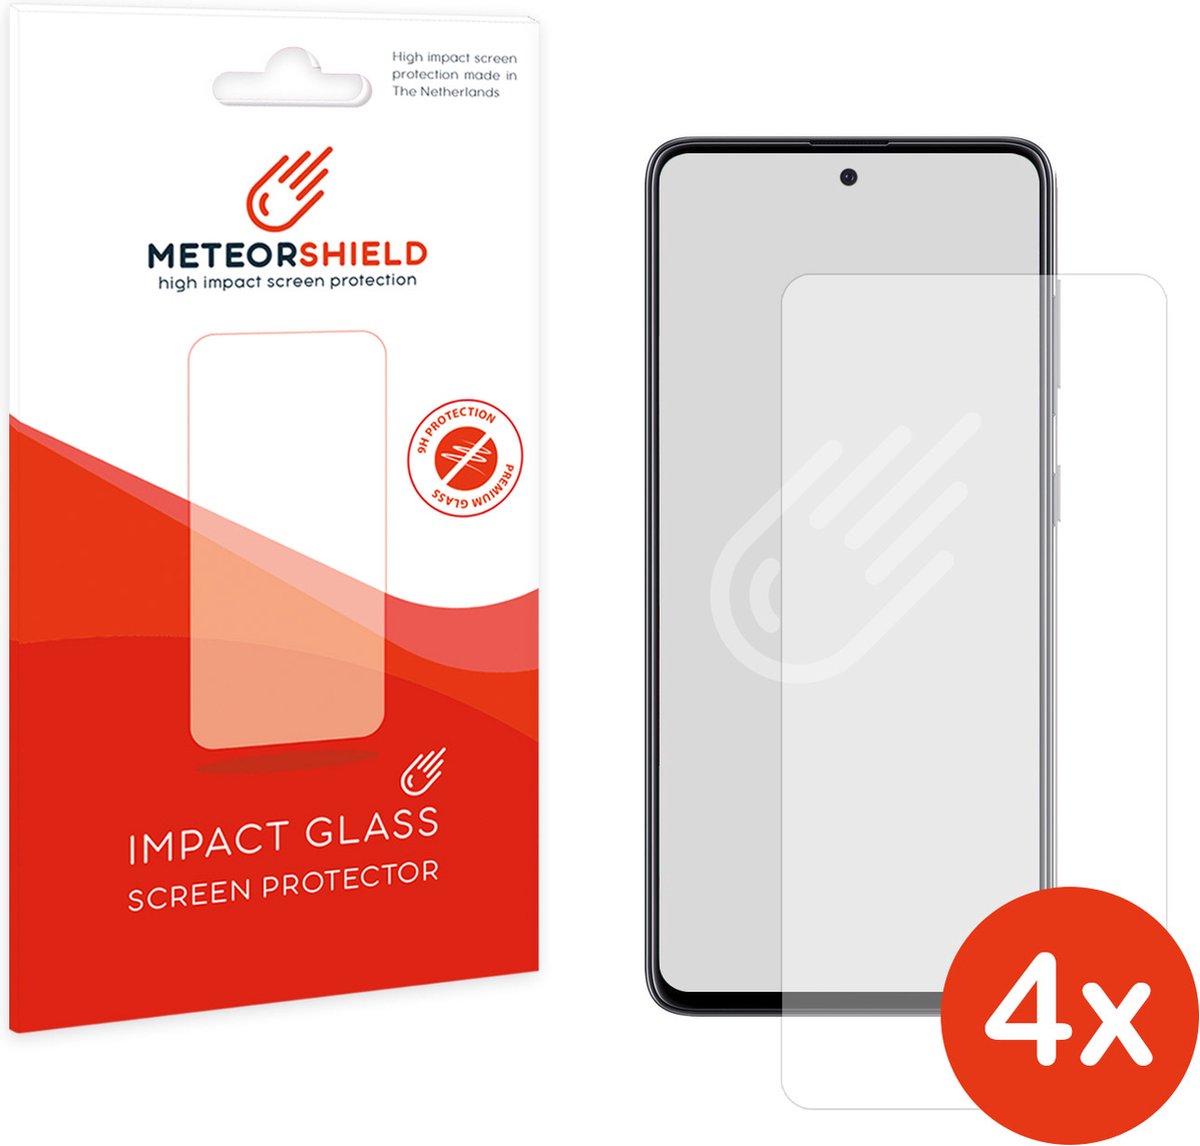 4 stuks: Meteorshield Samsung Galaxy A51 screenprotector - Ultra clear impact glass